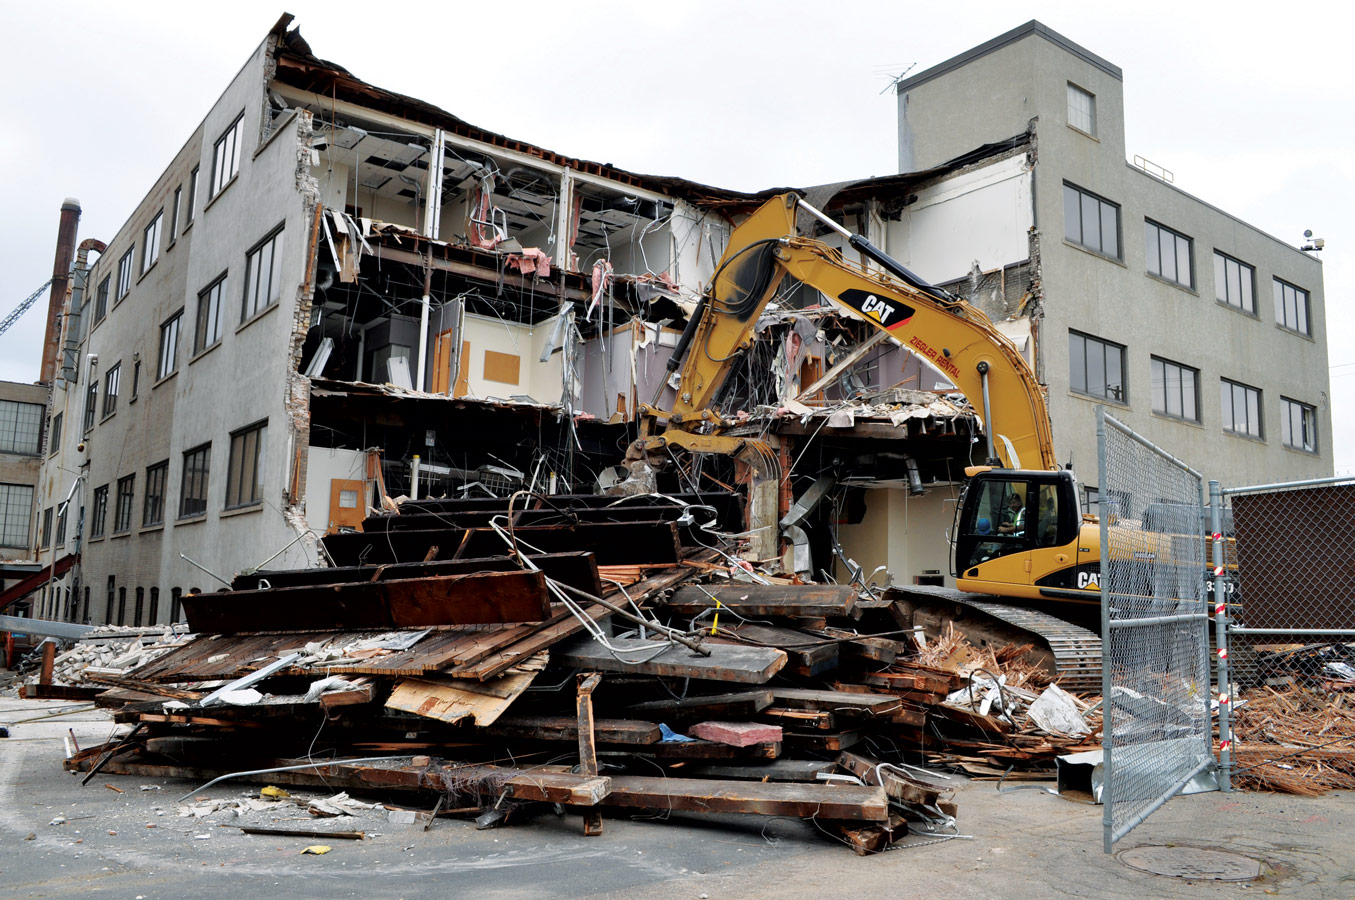 3M Former Headquarters Demolition and Brownfield Redevelopment